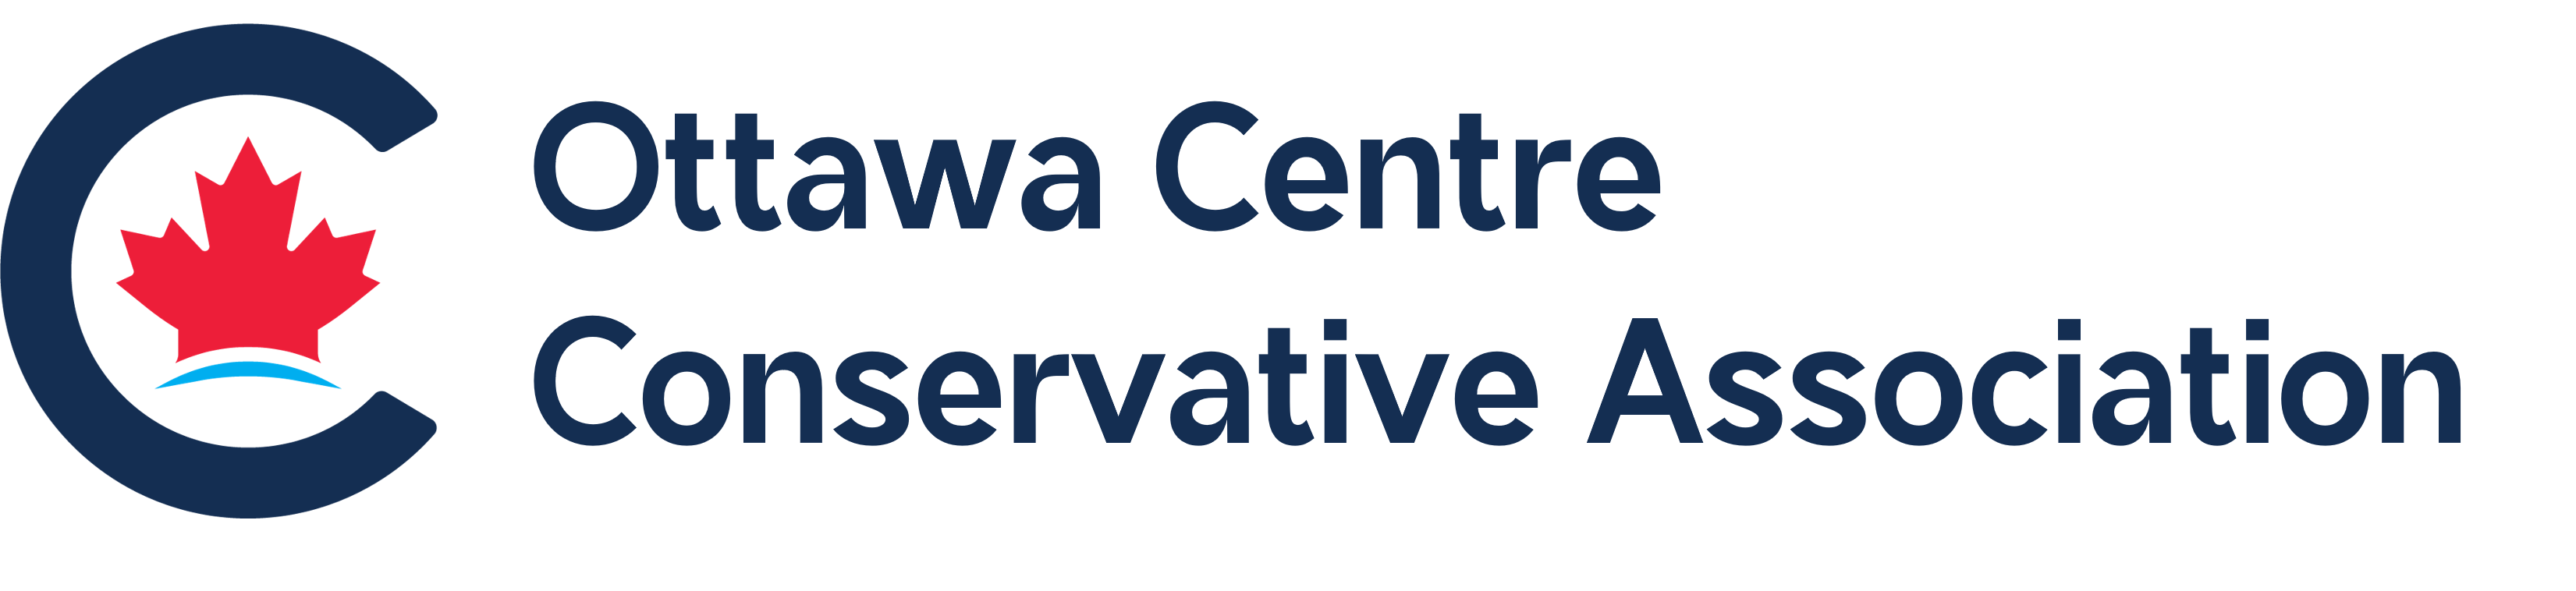 Ottawa Centre Conservative Association logo